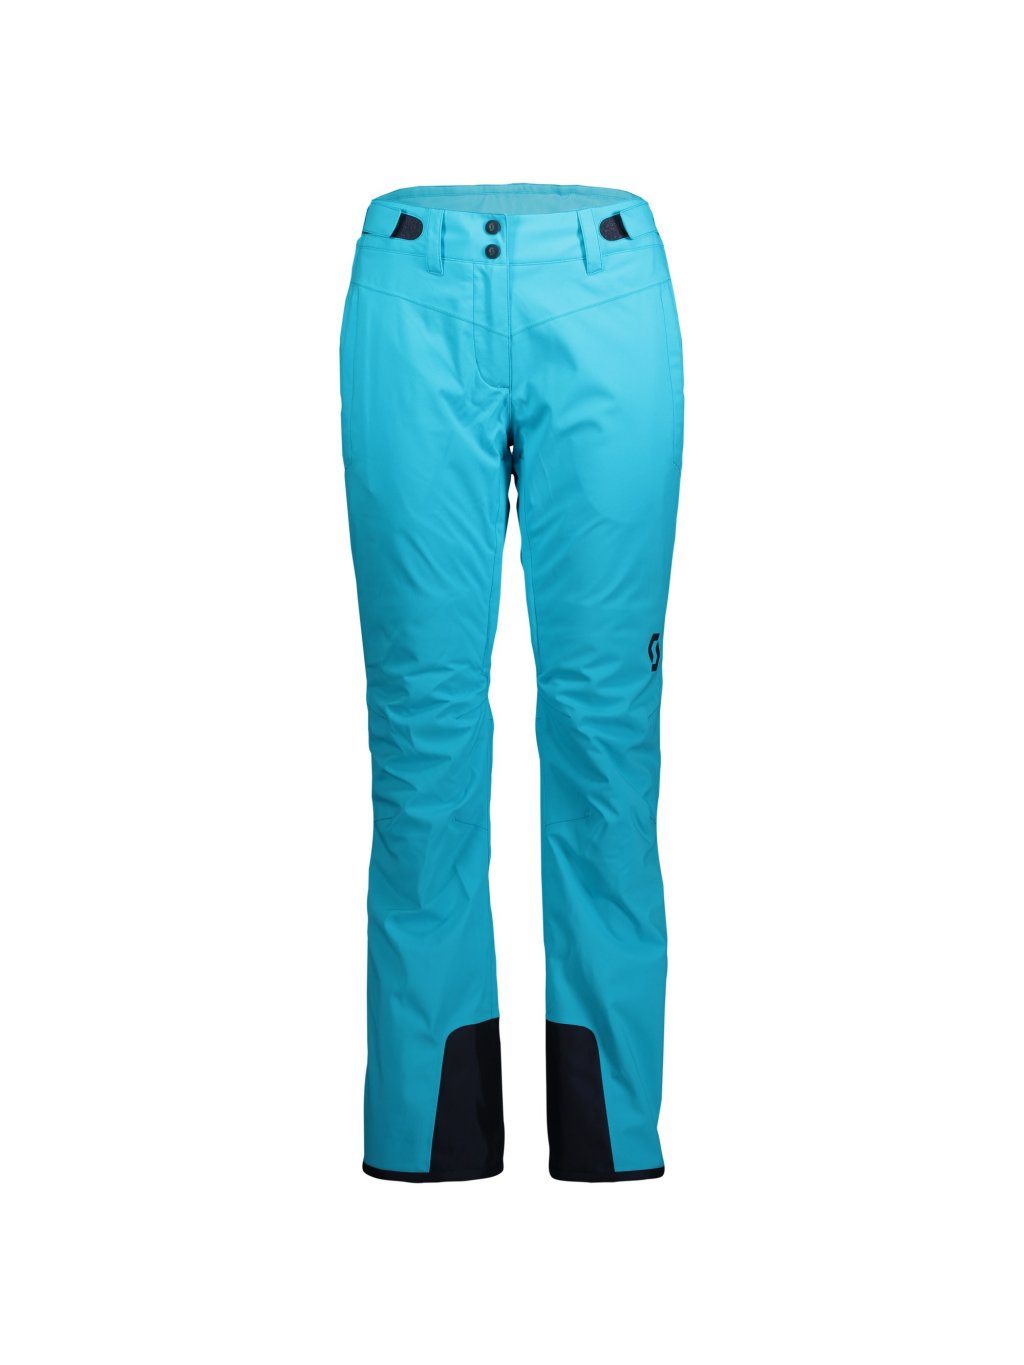 SCOTT Pant W's Ultimate Dryo 10, breeze blue (vzorek) (velikost M)